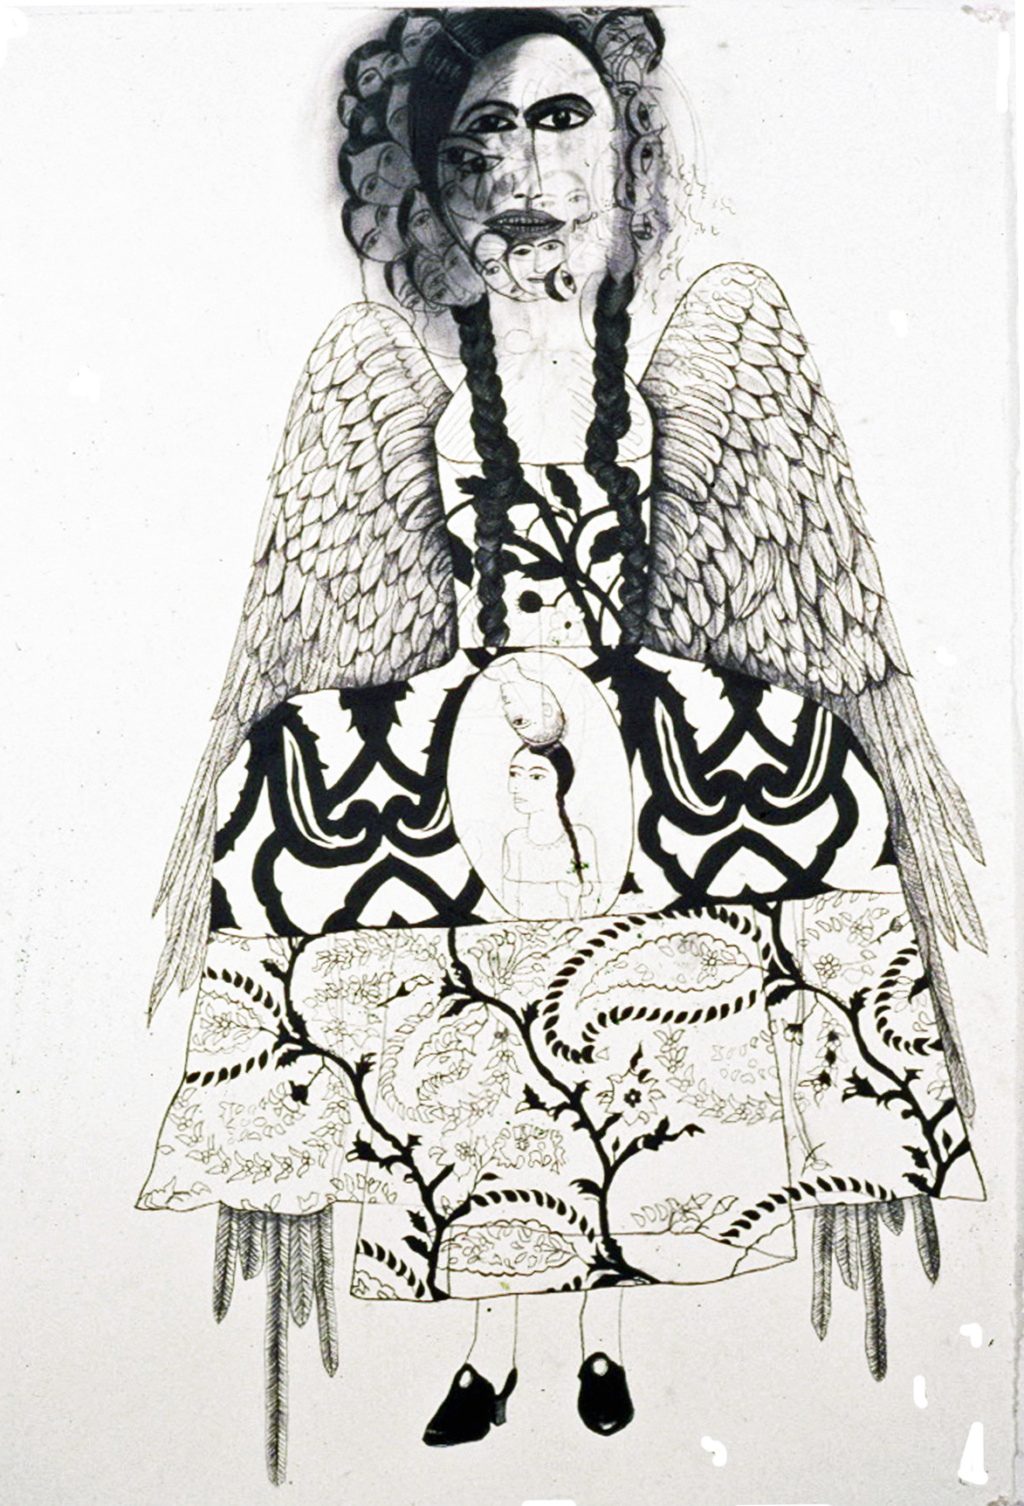 Samira Abbassy, Annunciation 2007
Charcoal on paper
111,76 x 76,2 cm 